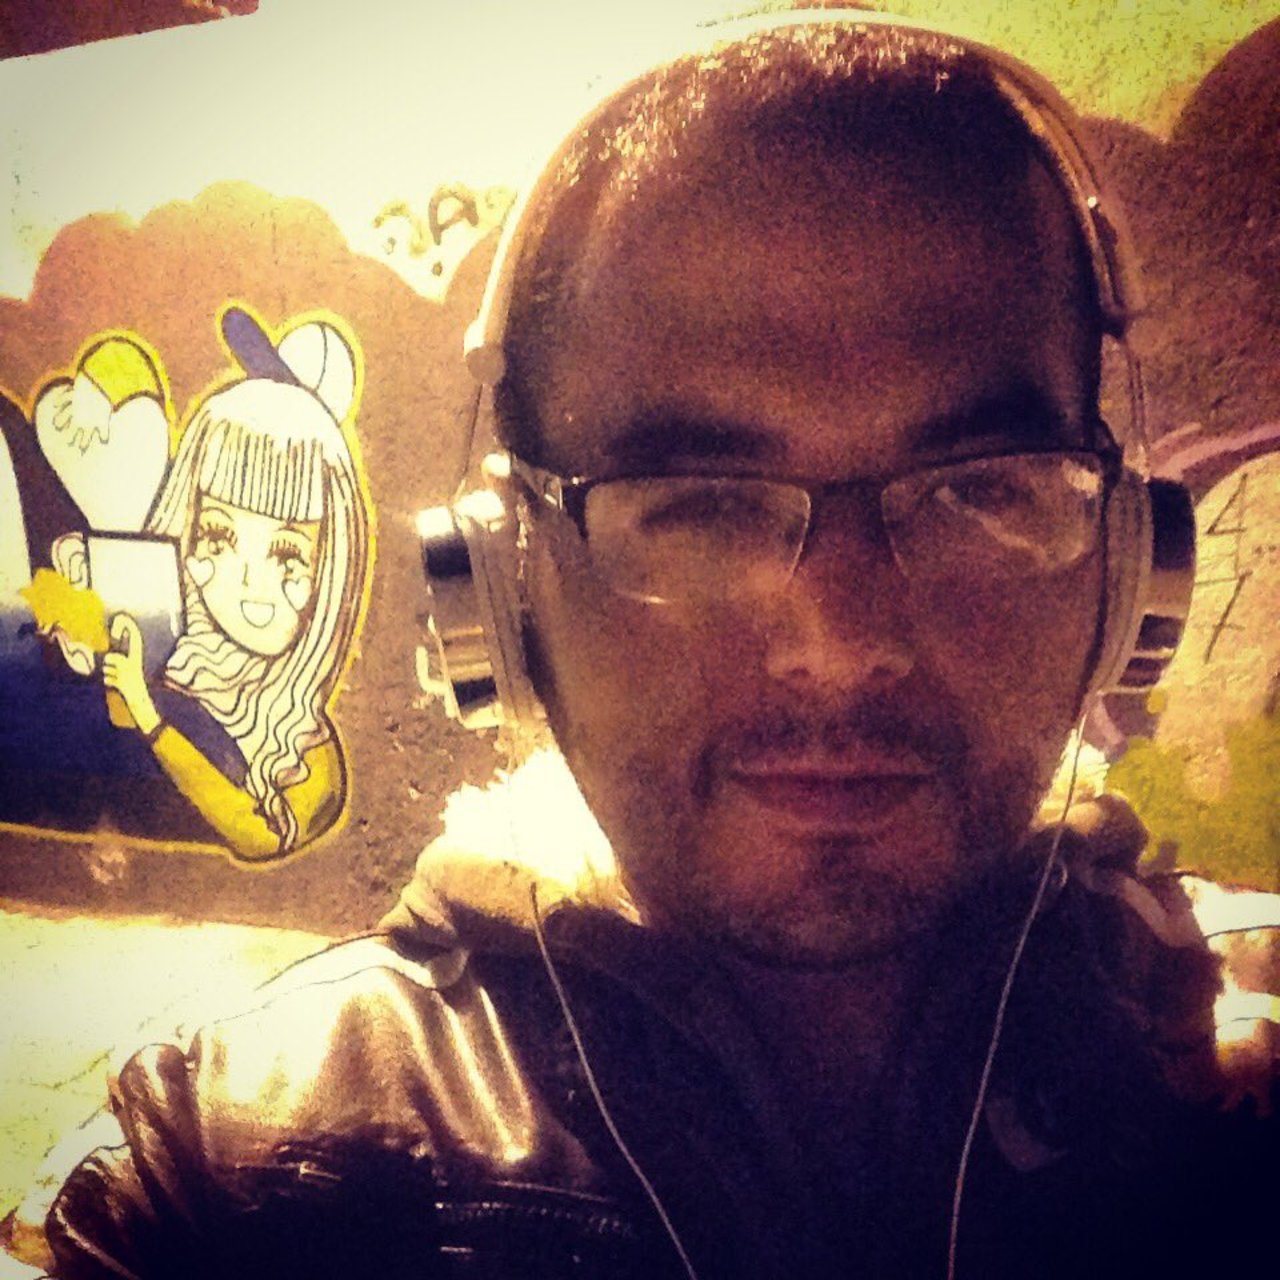 [Wandering Astro...] #Graffiti #StreetArt #ArteUrbano #ArtDeRue https://instagram.com/p/9NNZnpB5pt/ https://t.co/udbq4tqjLa